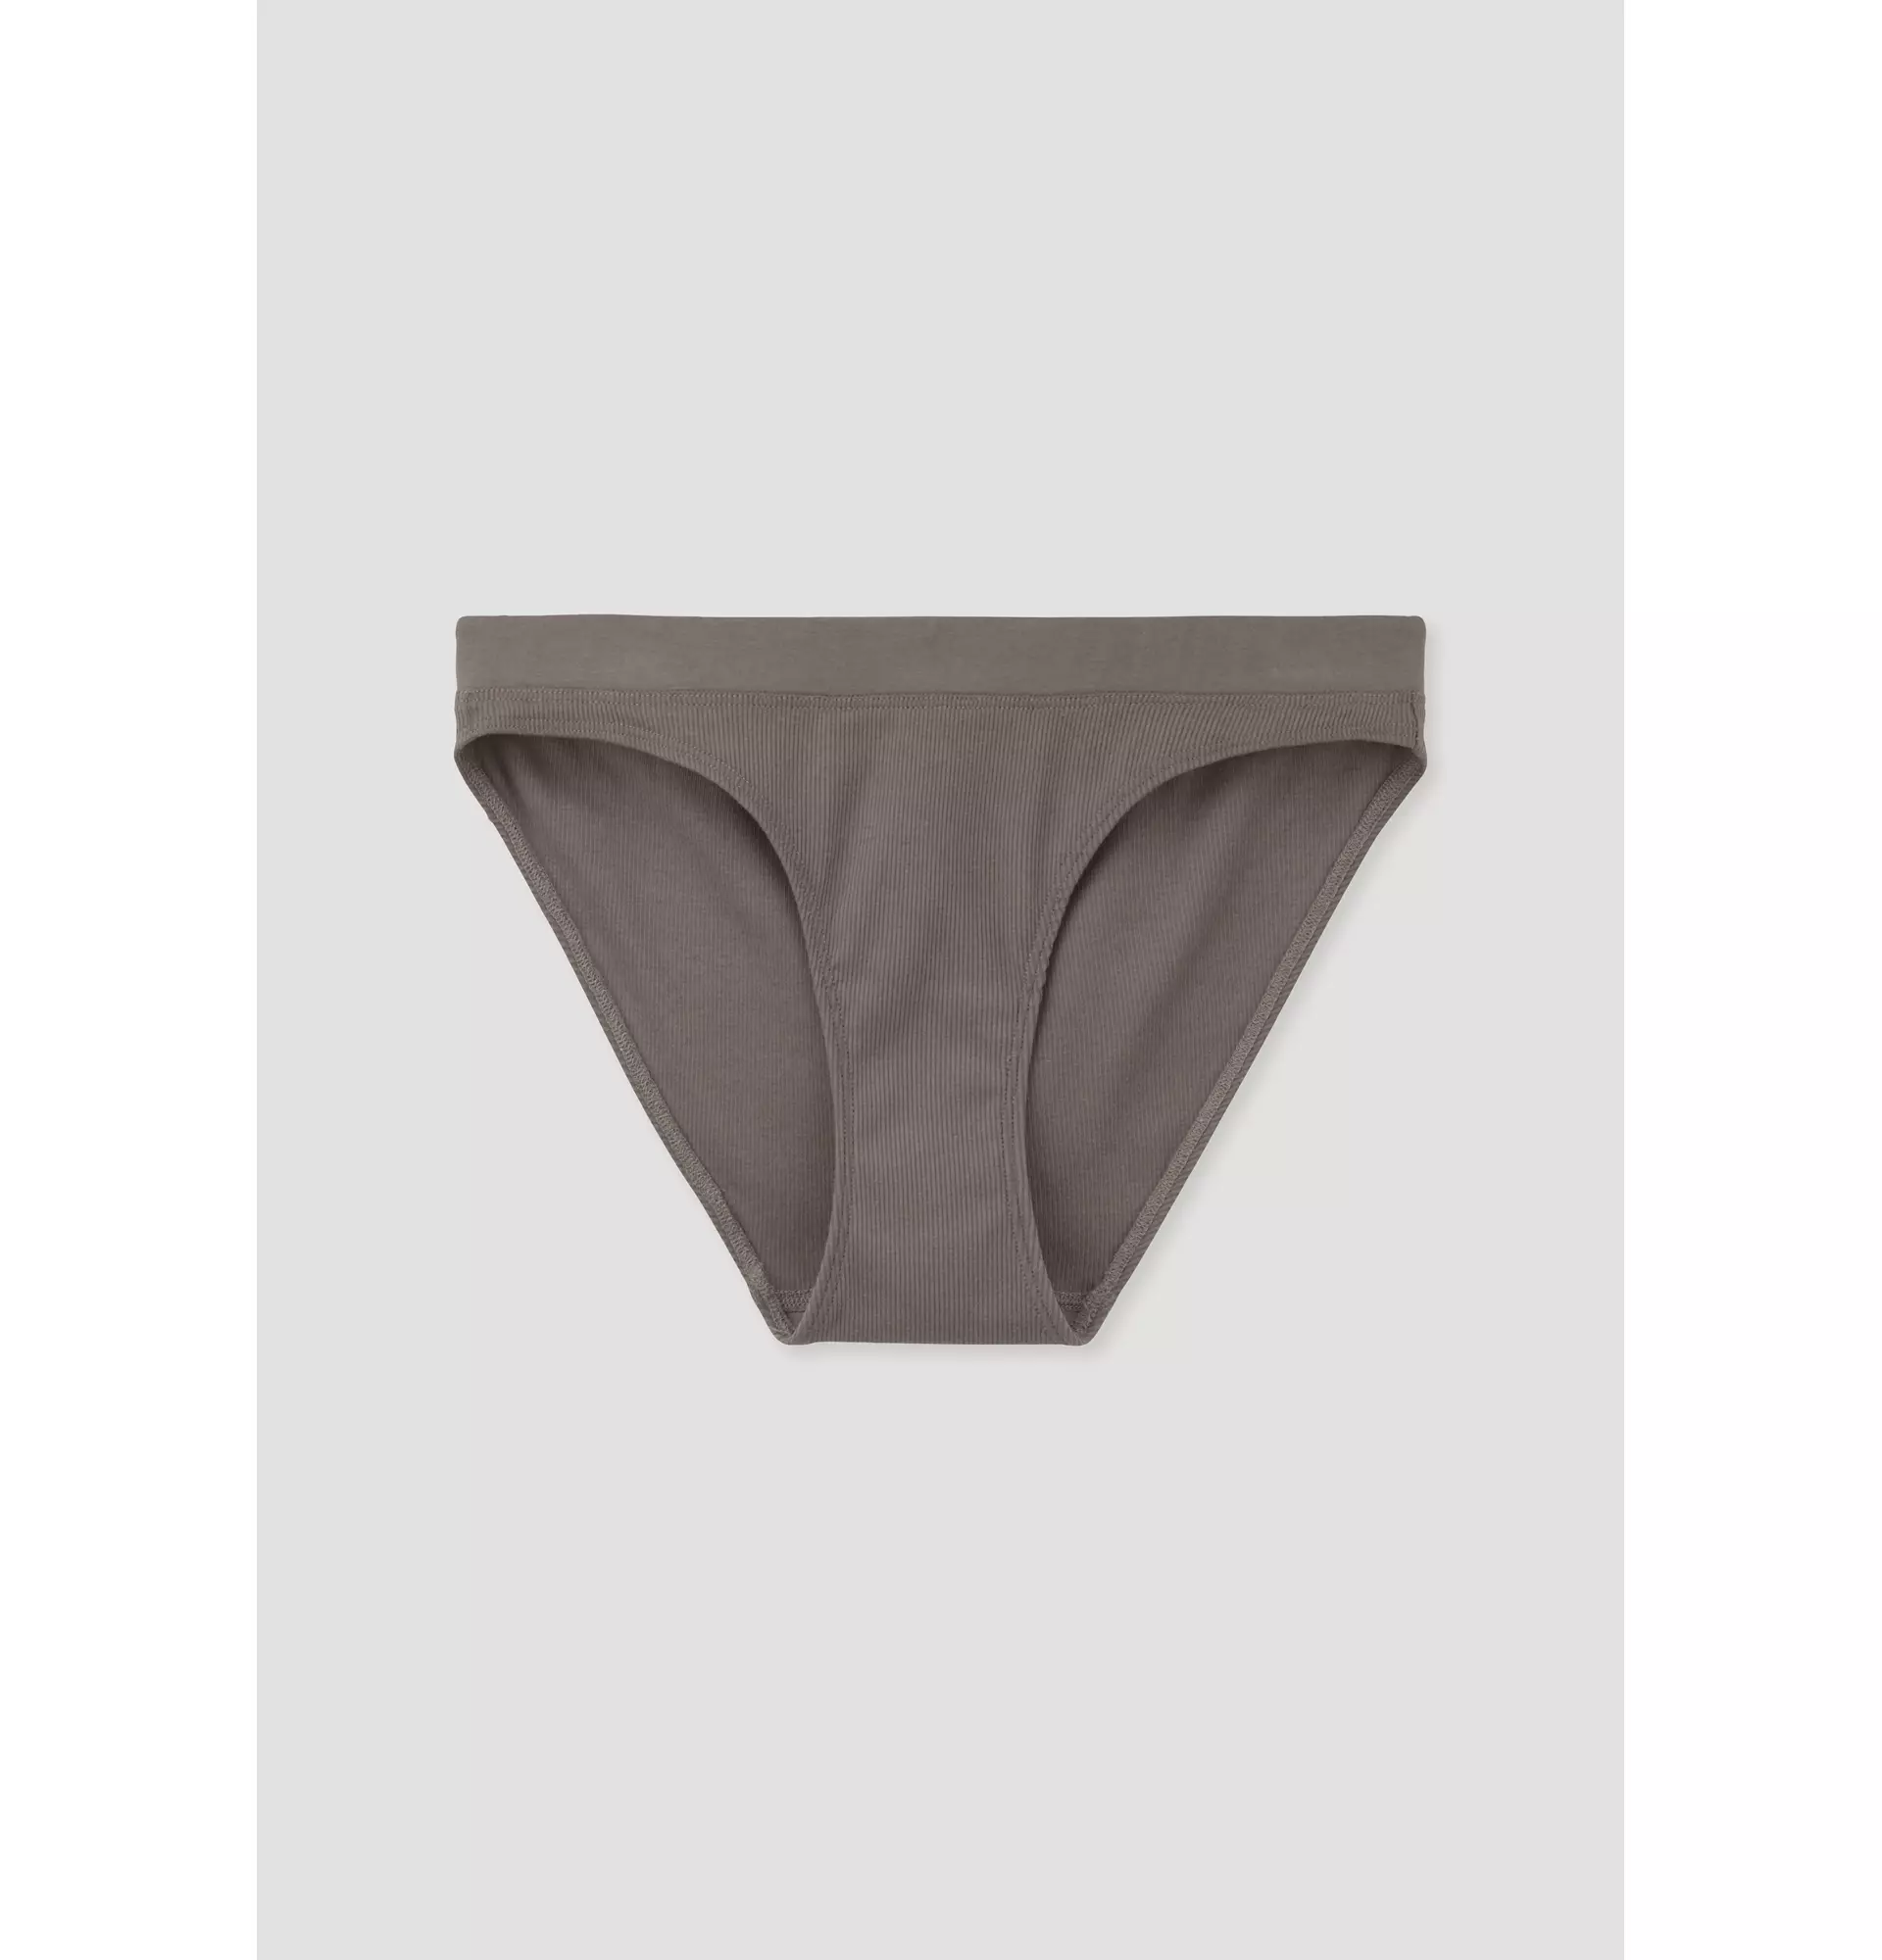 Used underwear gray stock image. Image of satin, domestic - 33945477